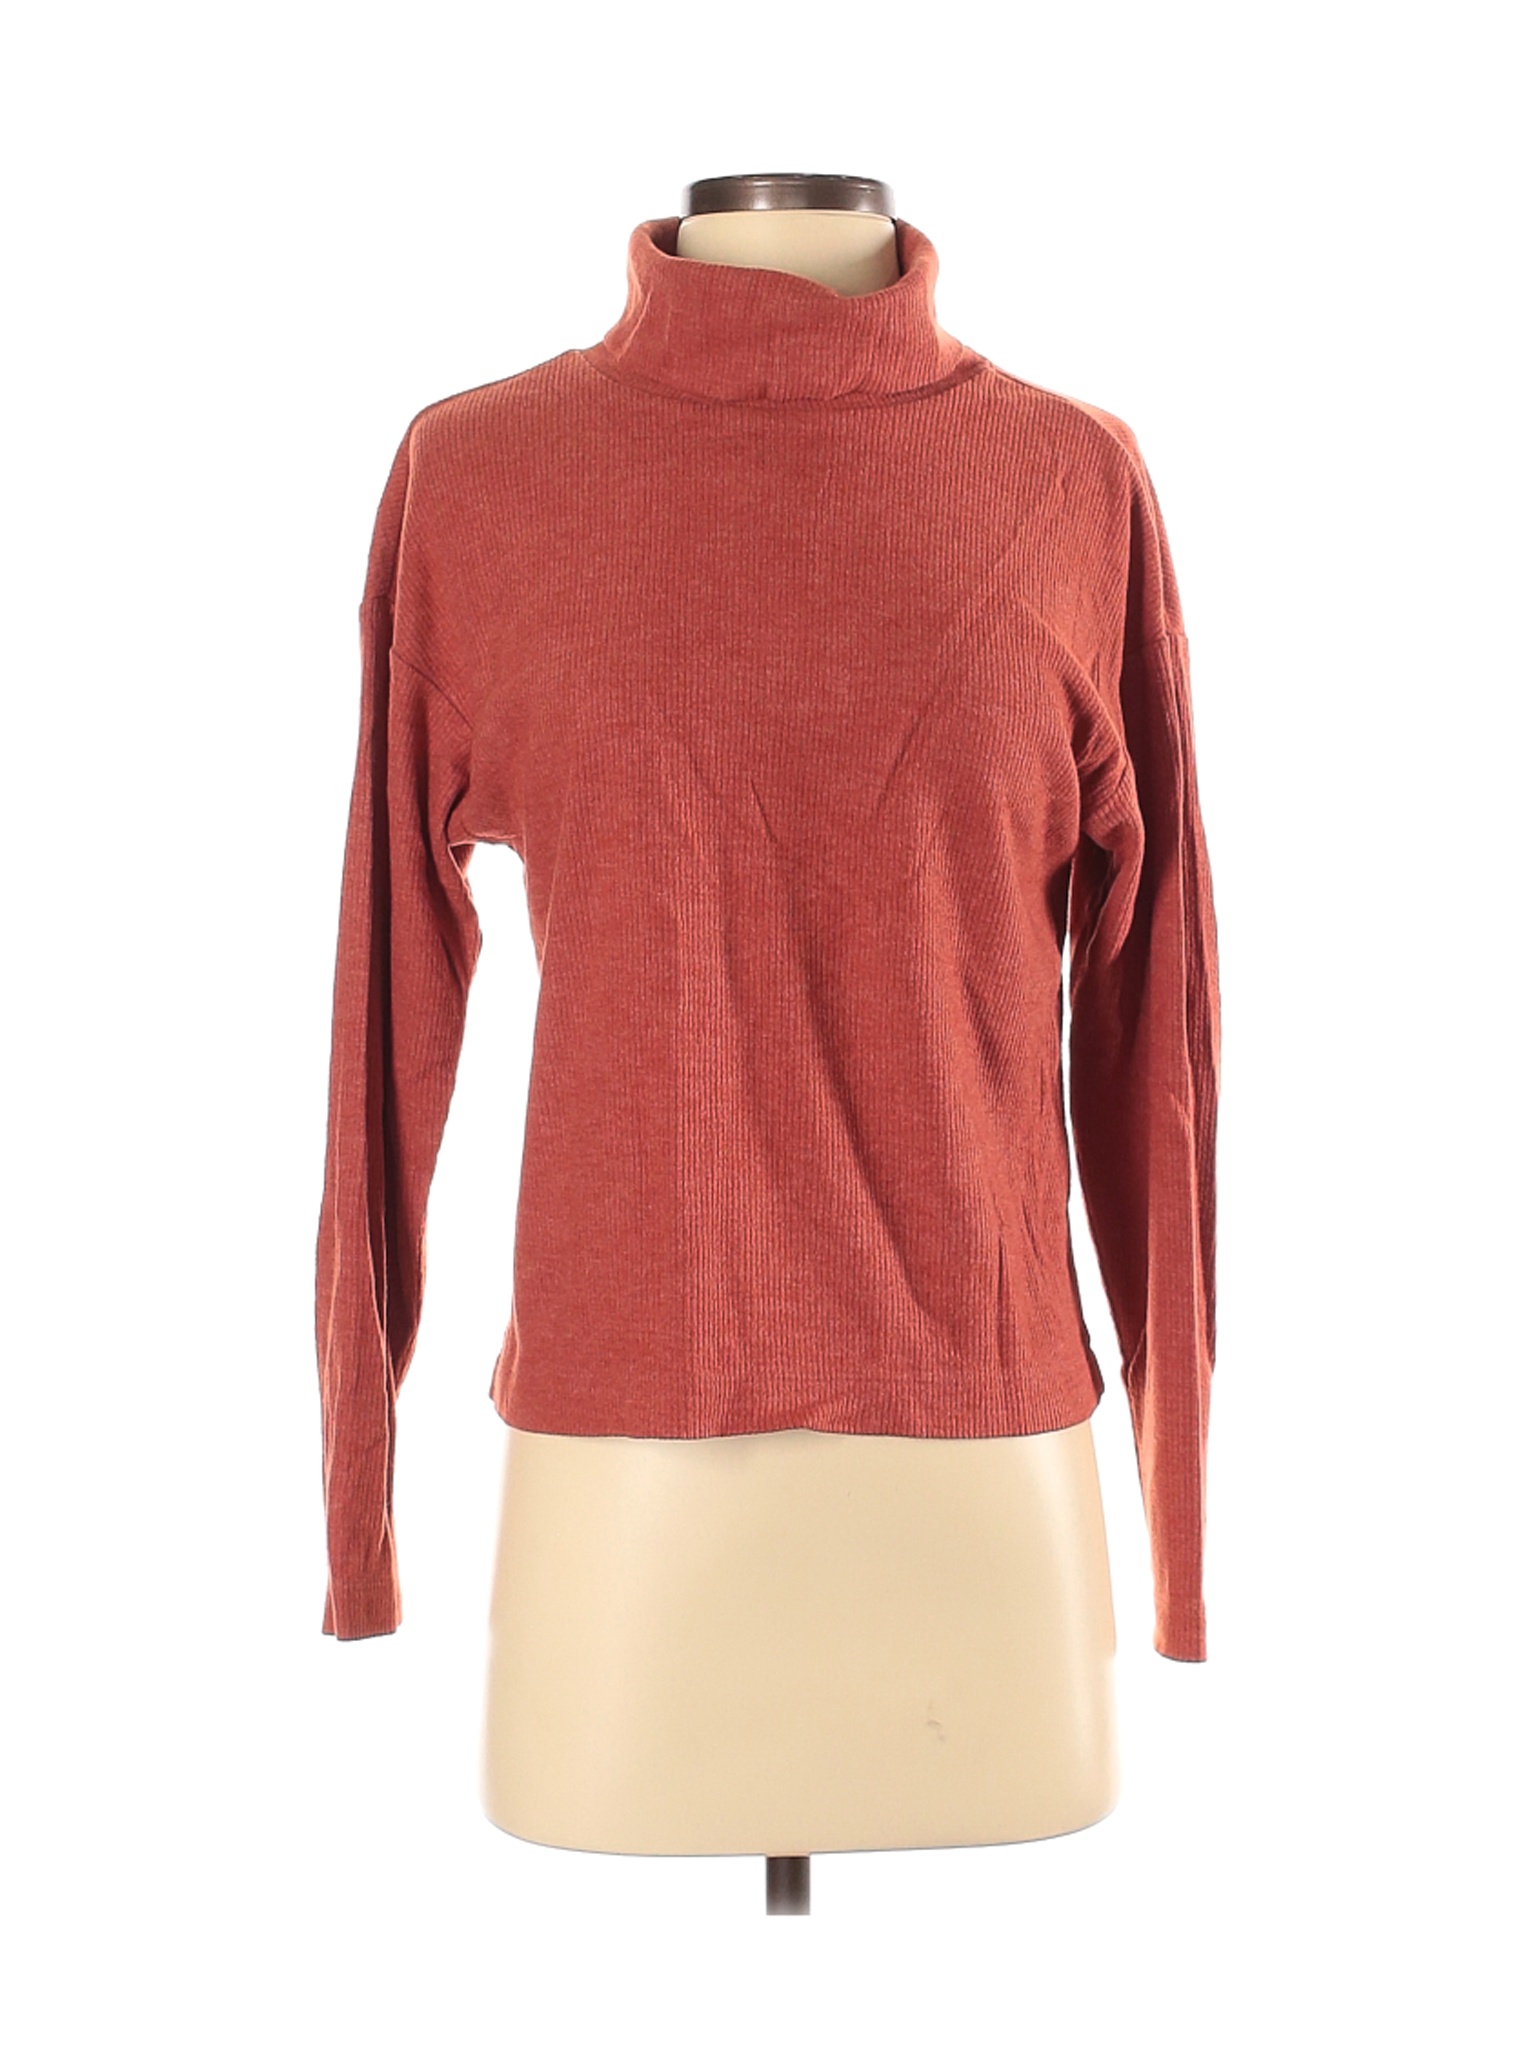 Uniqlo Women Orange Turtleneck Sweater S | eBay